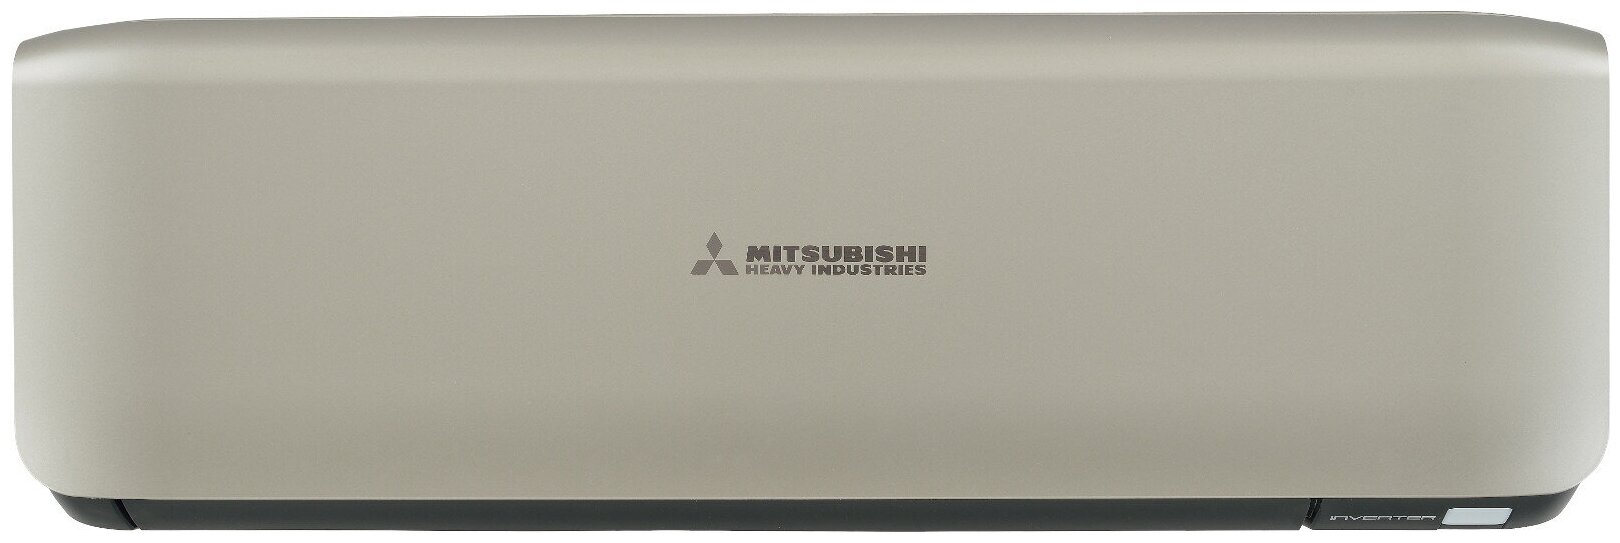 Сплит-система Mitsubishi Heavy Industries SRK50ZS-W(B T) / SRC50ZS-W